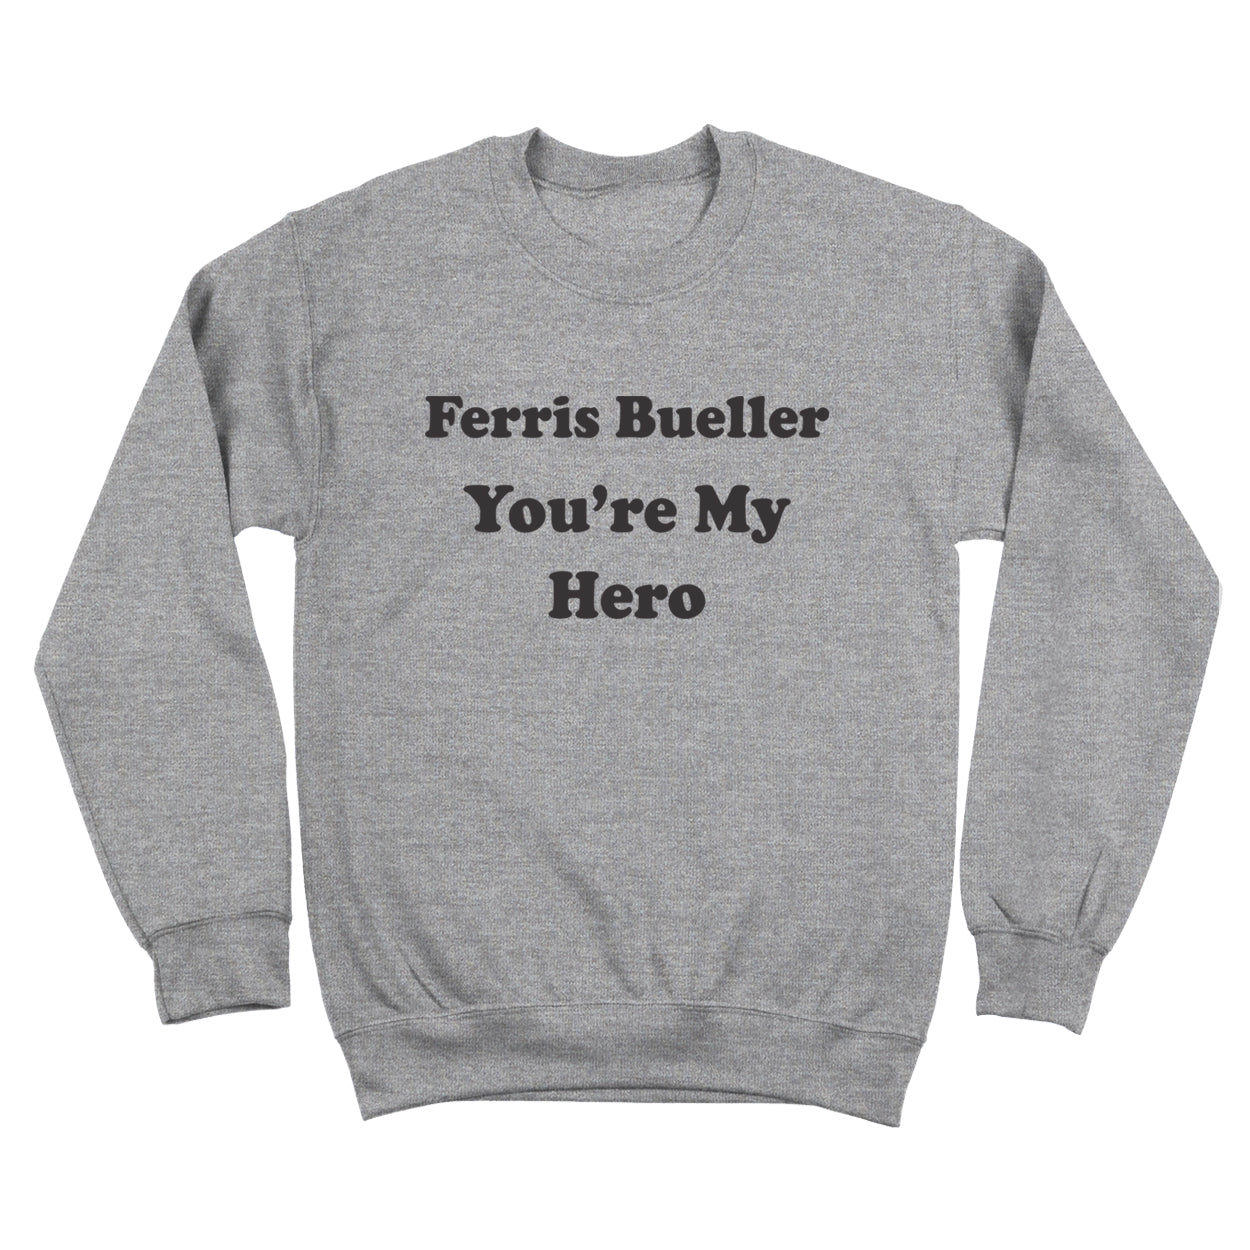 Ferris Bueller, You're My Hero!